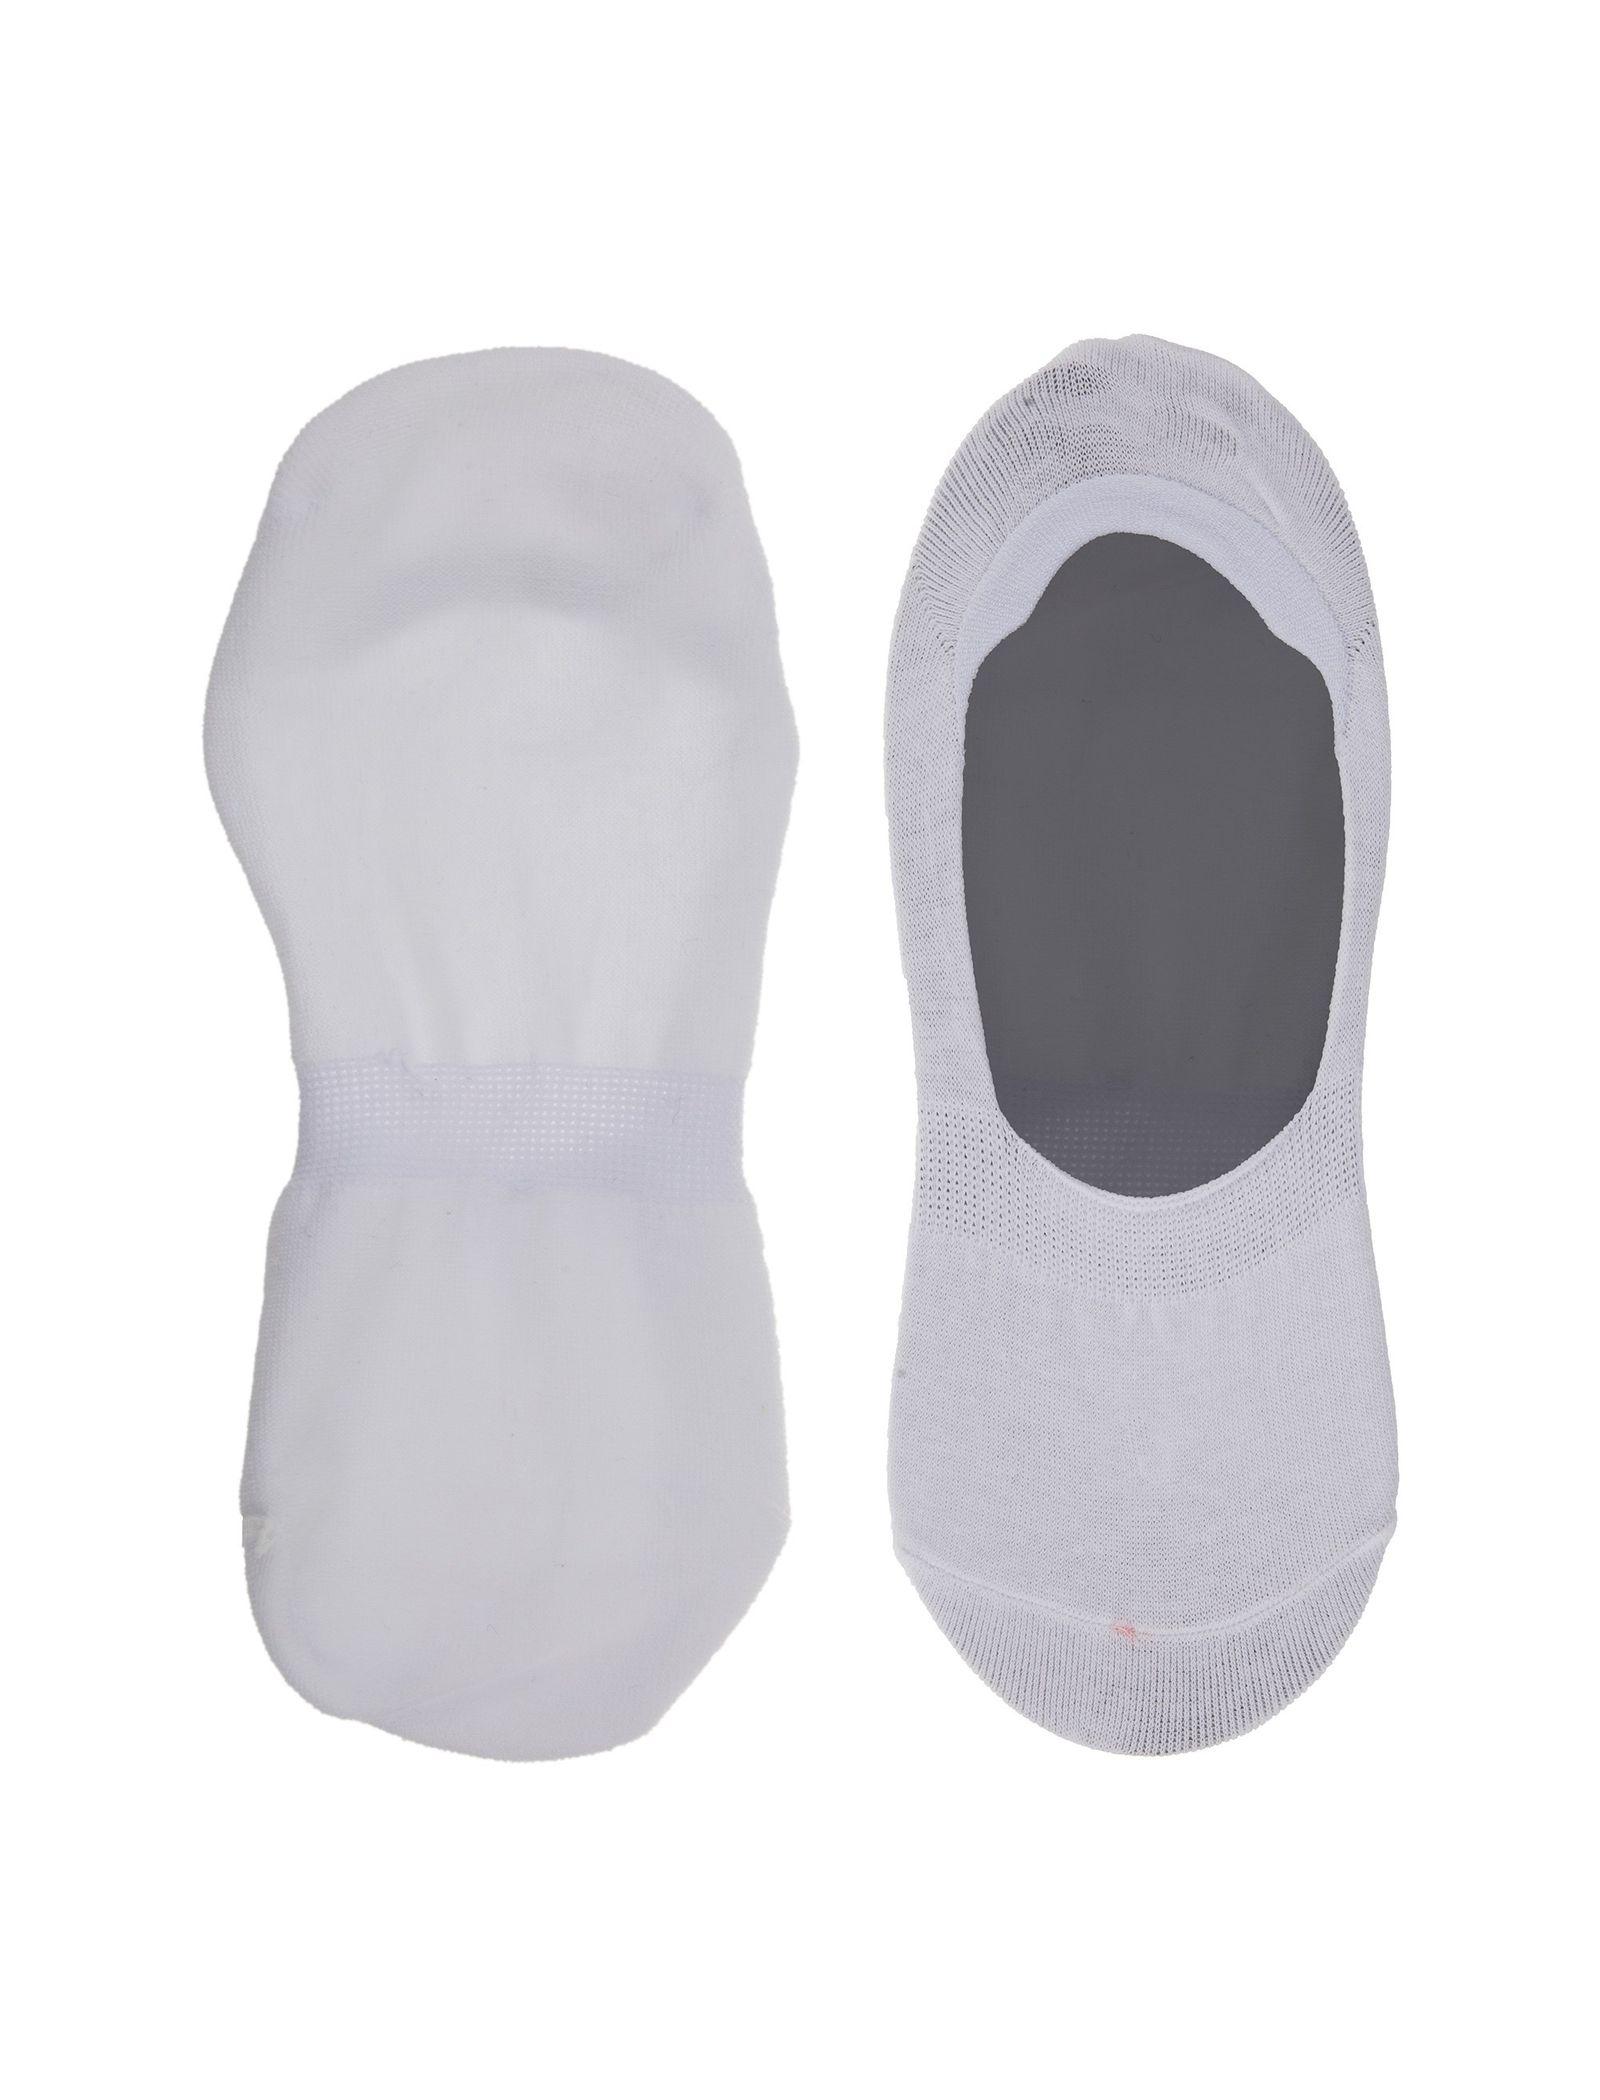 جوراب نخی کفی مردانه بسته 2 عددی - یوپیم - سفيد - 1